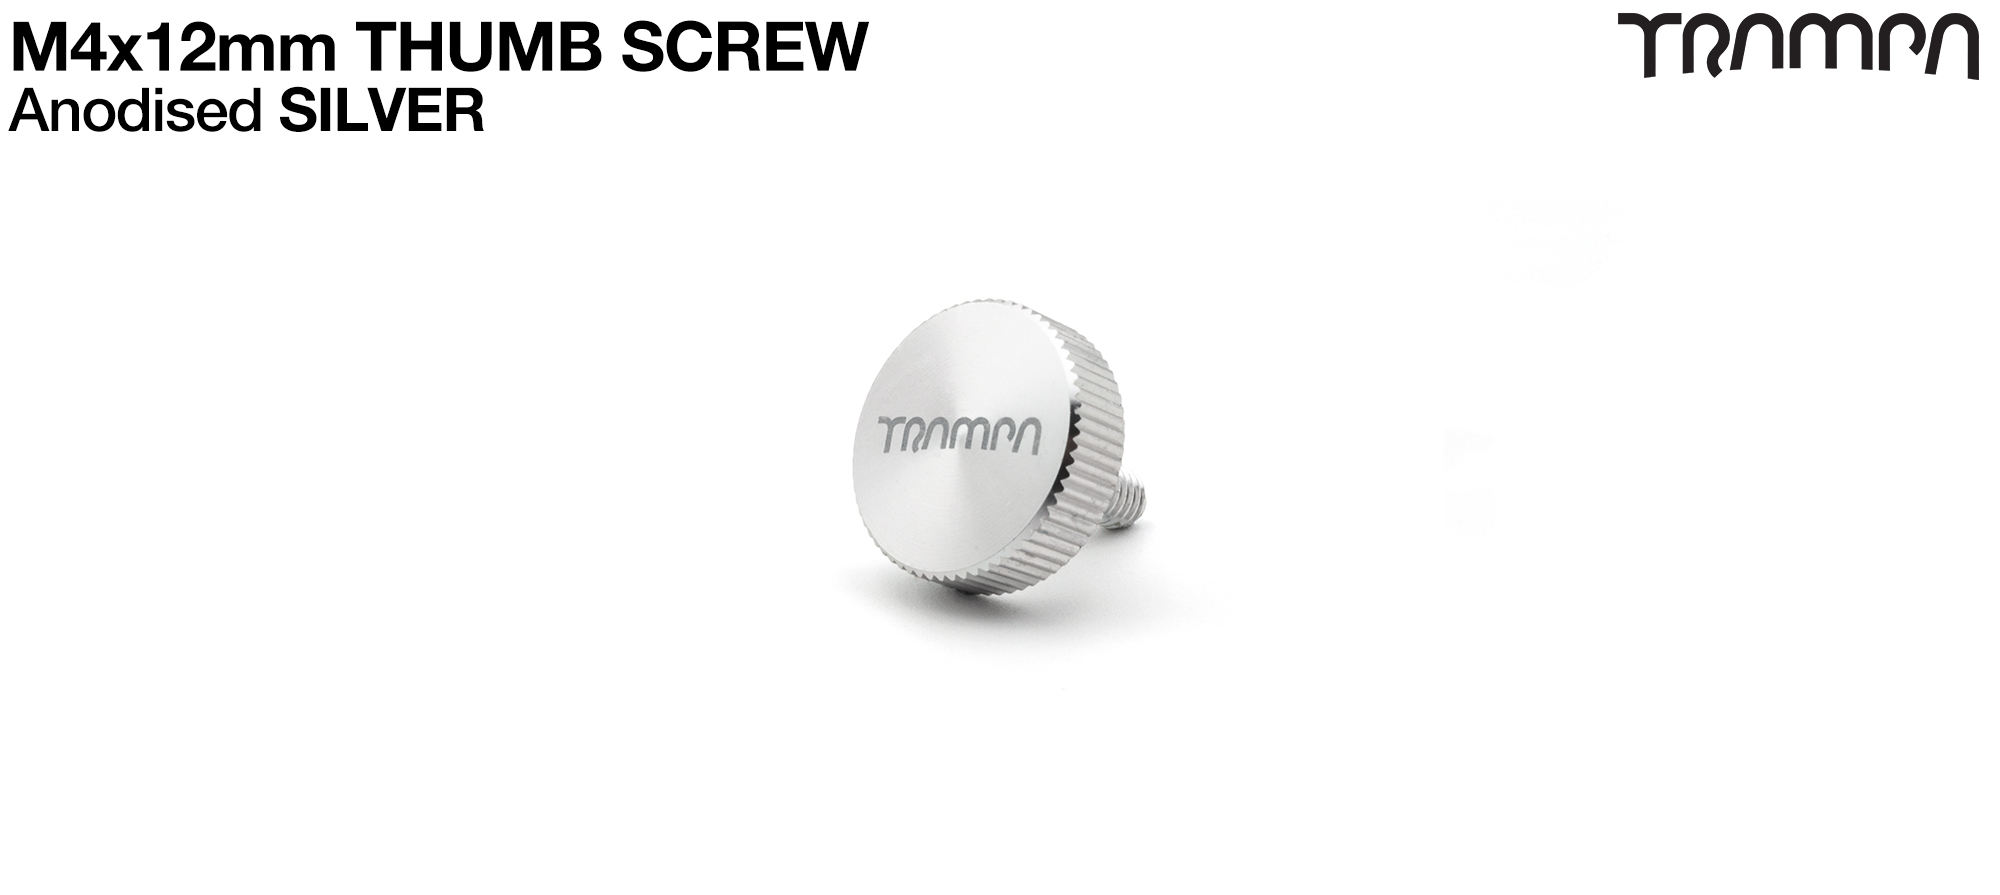 Thumb Screw - SILVER 